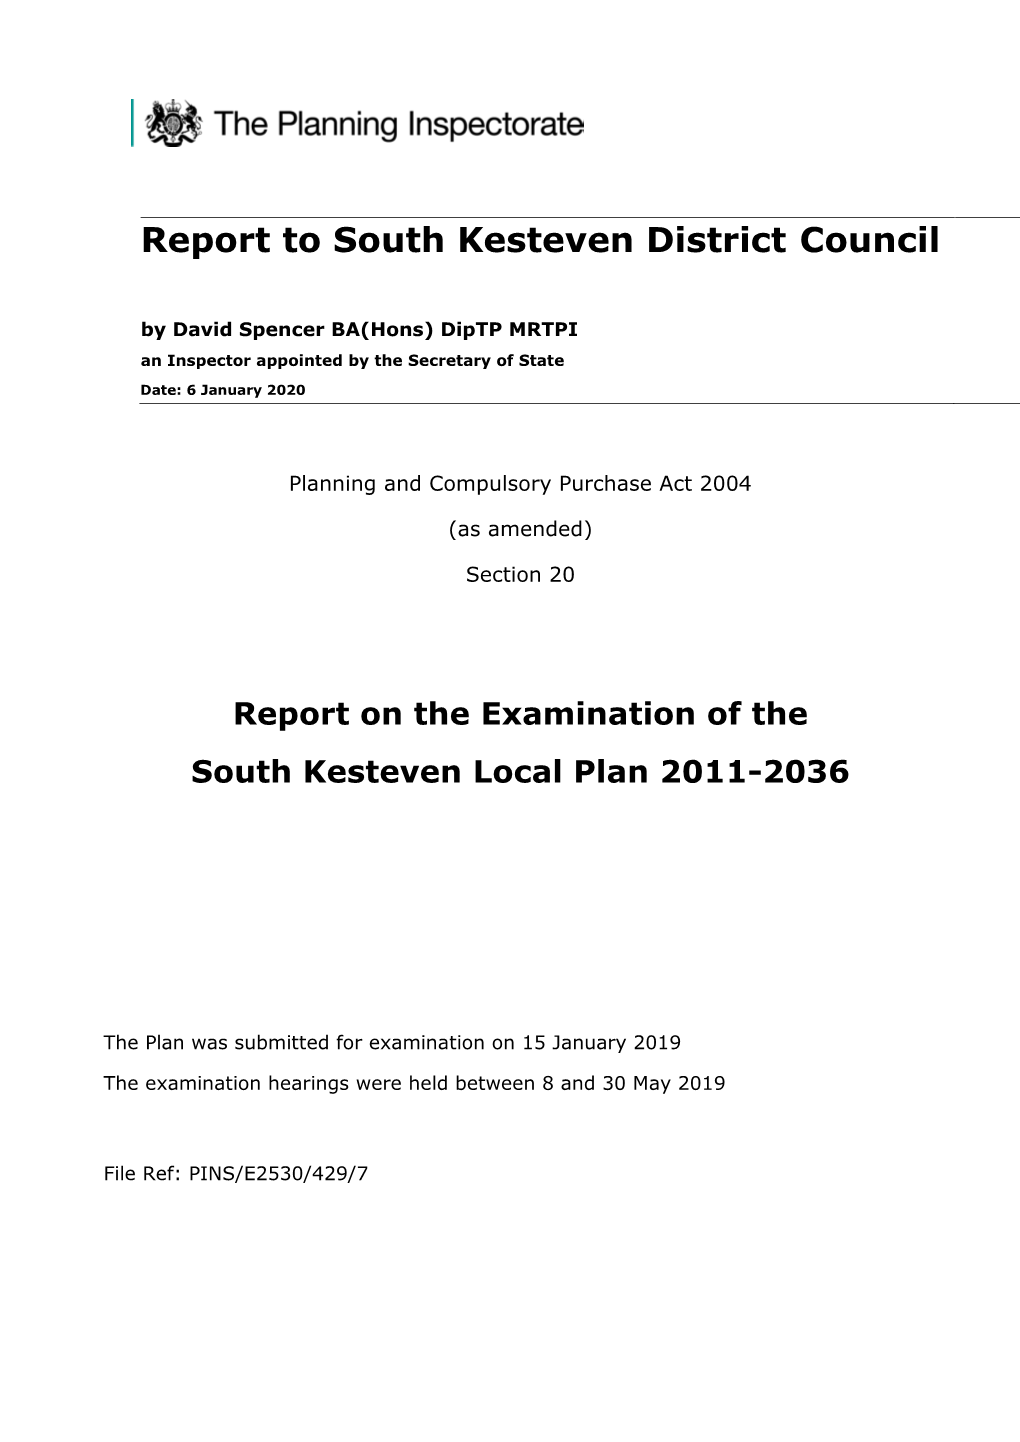 Report to South Kesteven District Council